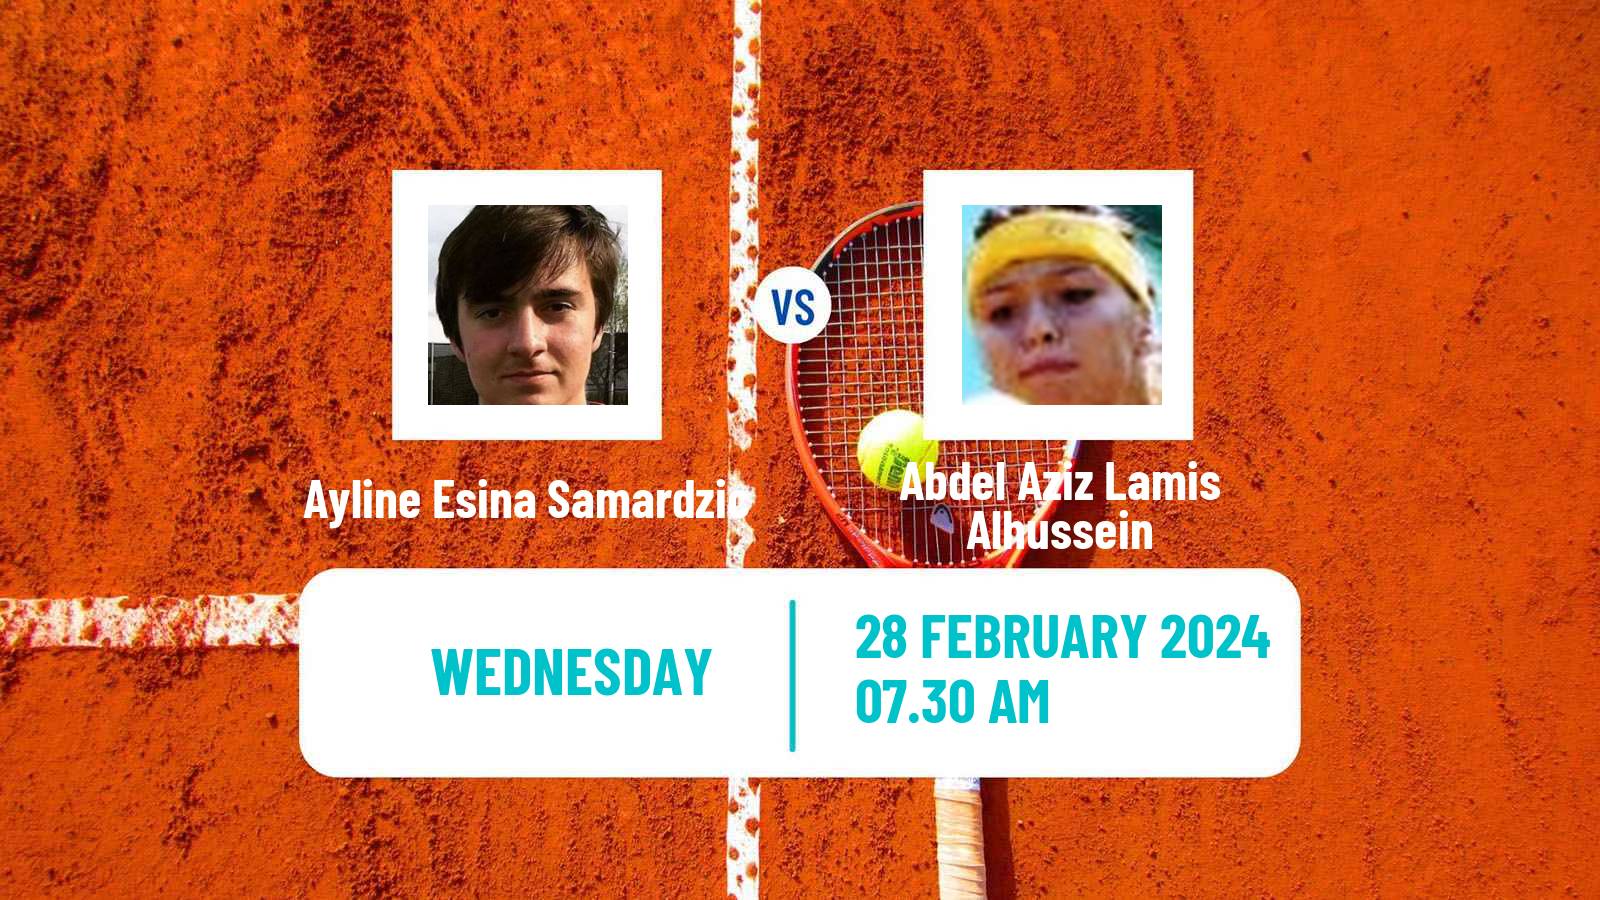 Tennis ITF W15 Sharm Elsheikh 4 Women Ayline Esina Samardzic - Abdel Aziz Lamis Alhussein